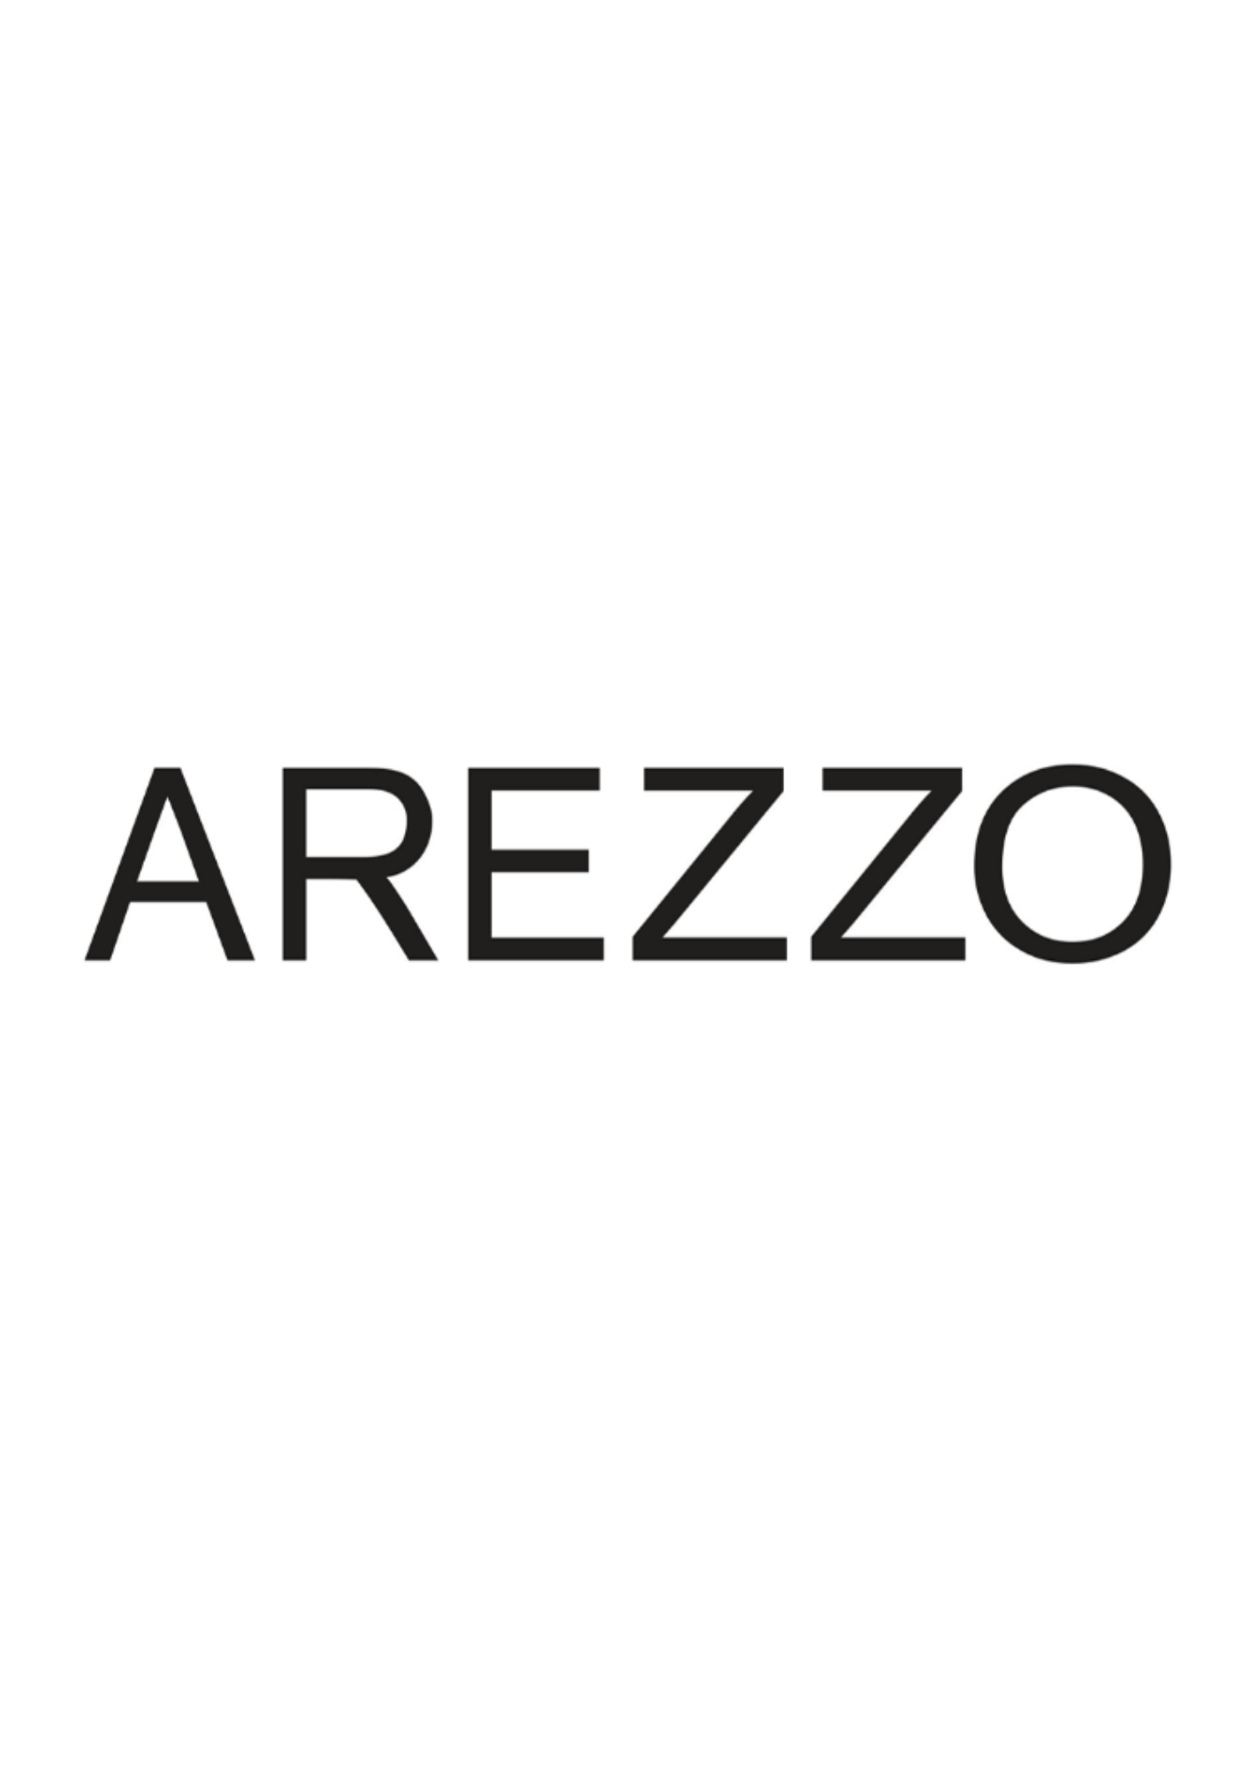 Arezzo Folhetos promocionais